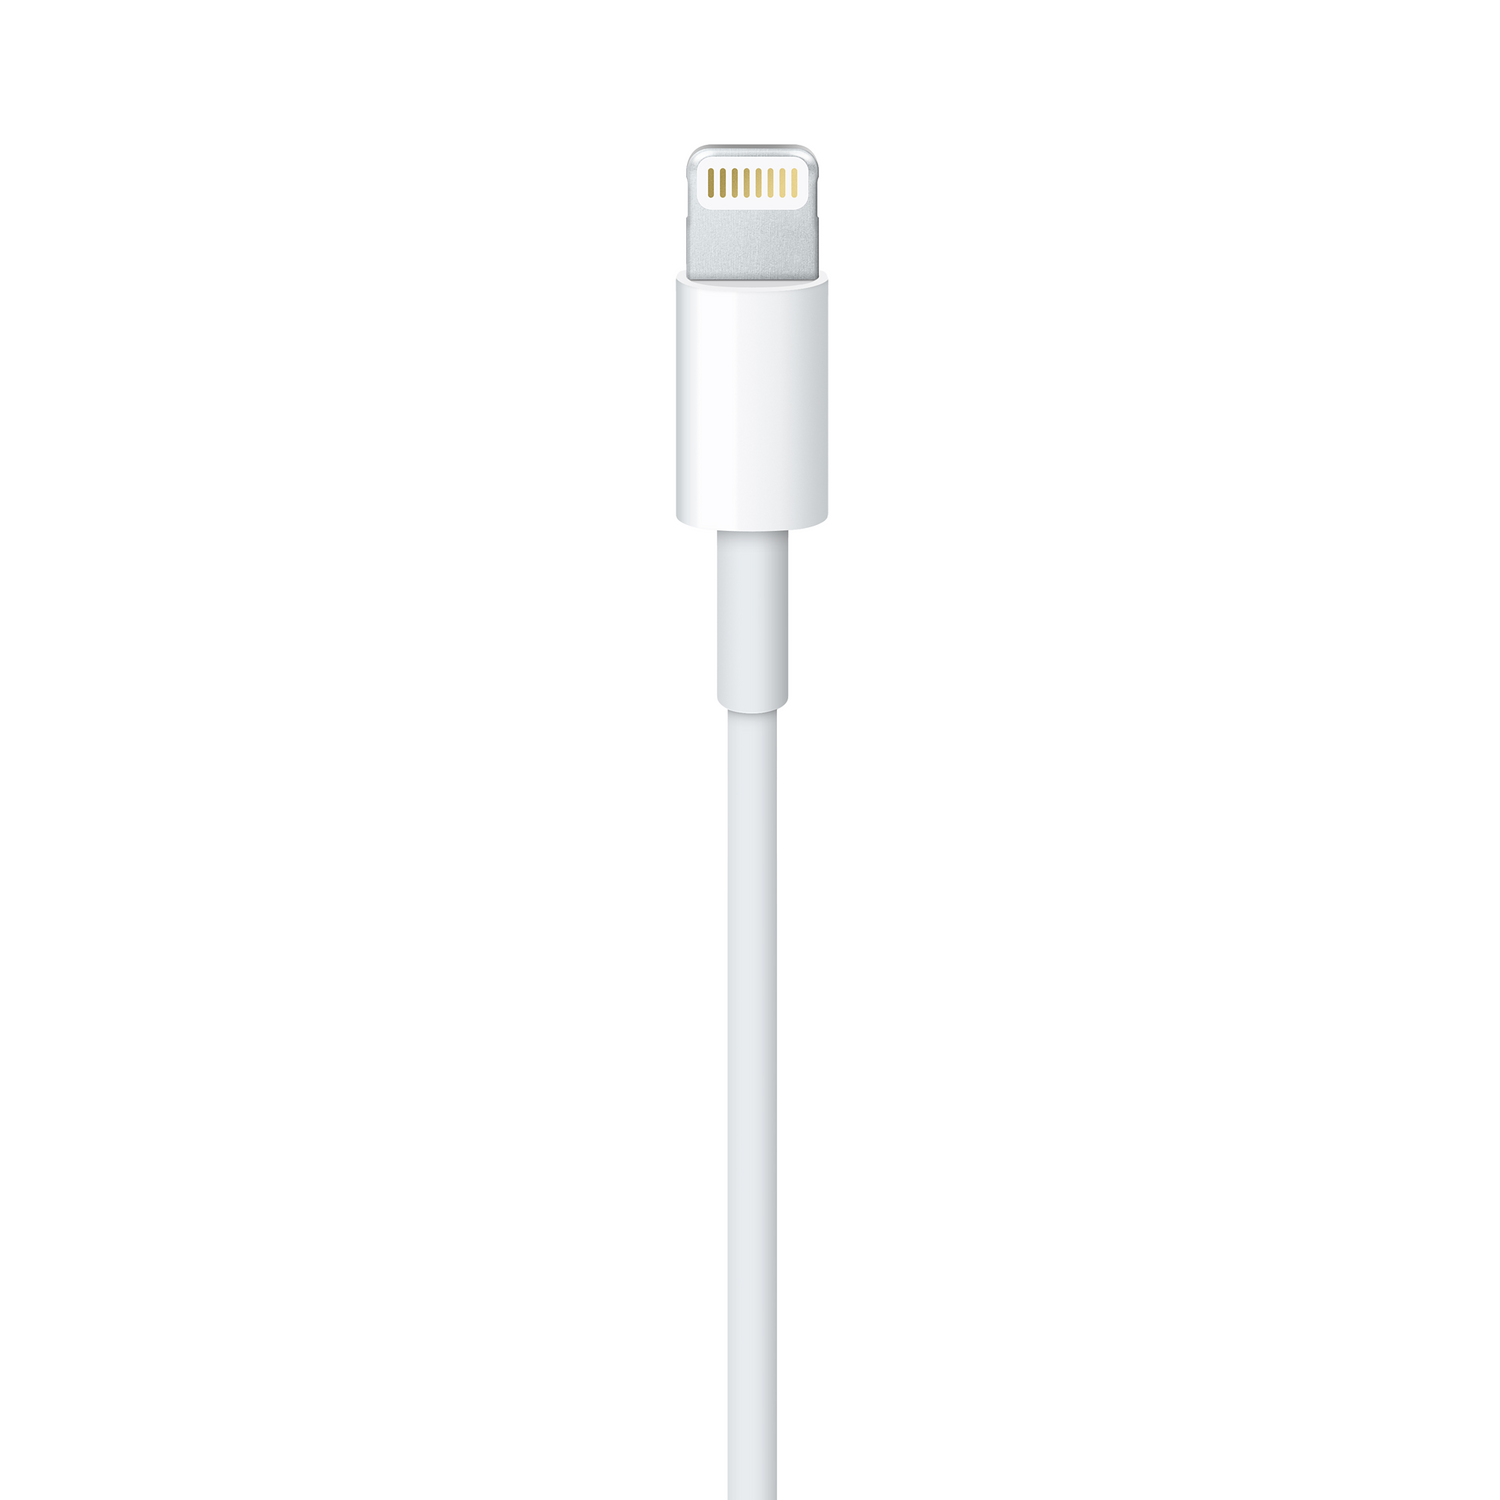 Cable Lightning USB Apple 2.0 Mt